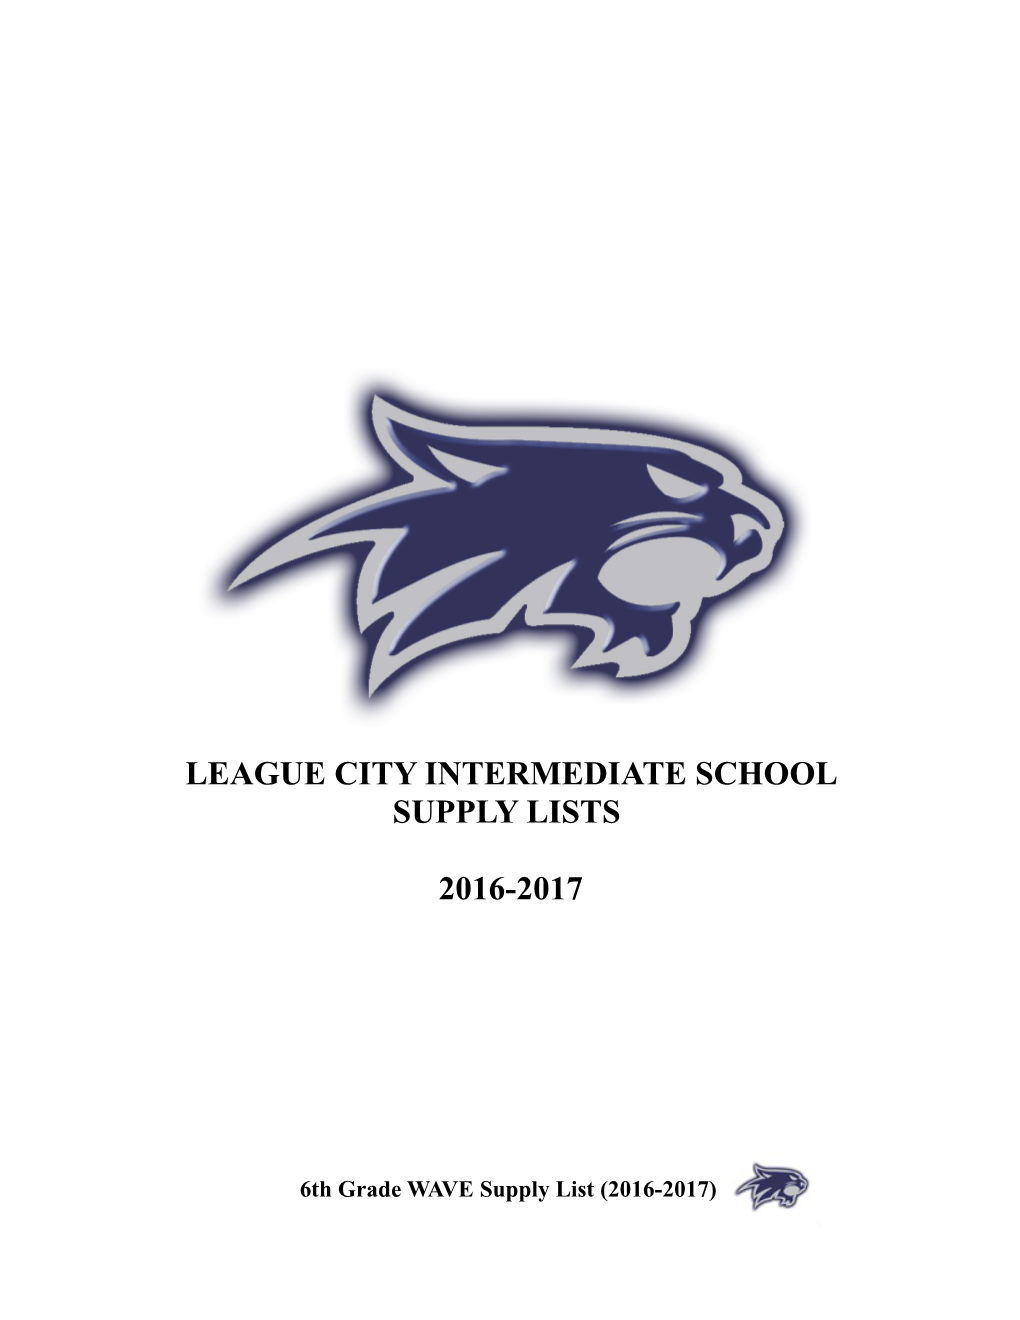 League City Intermediate School Supply Lists